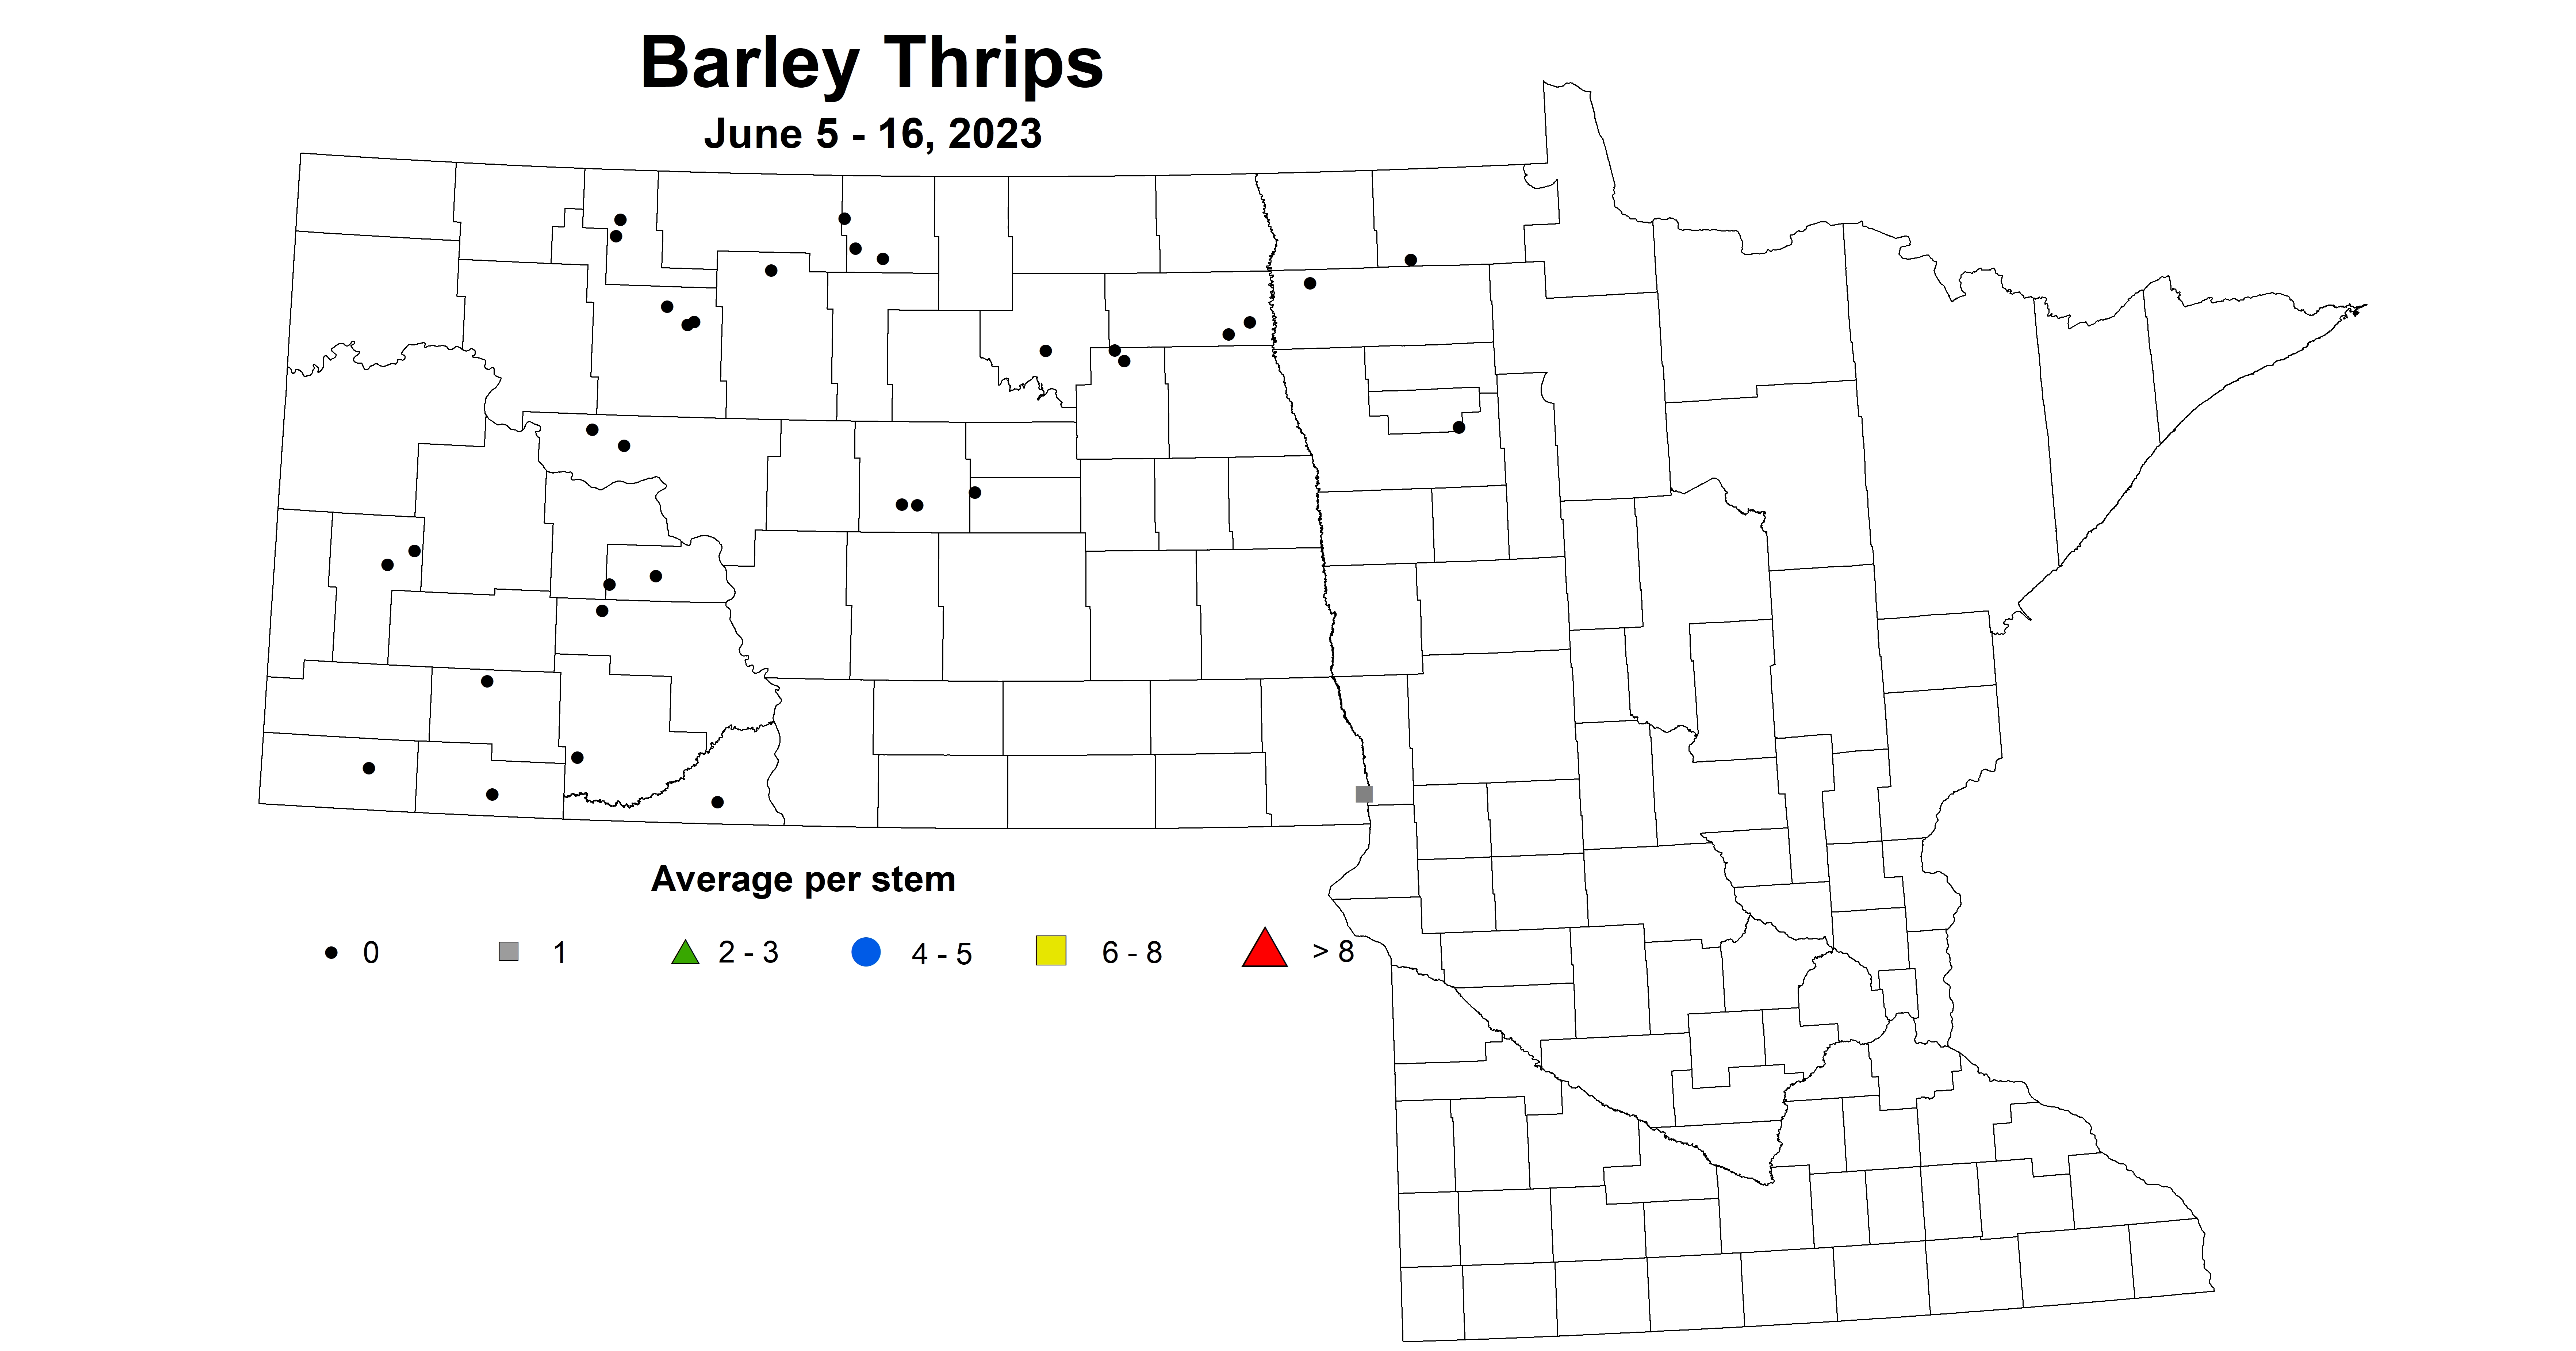 barley thrips June 5-16 2023